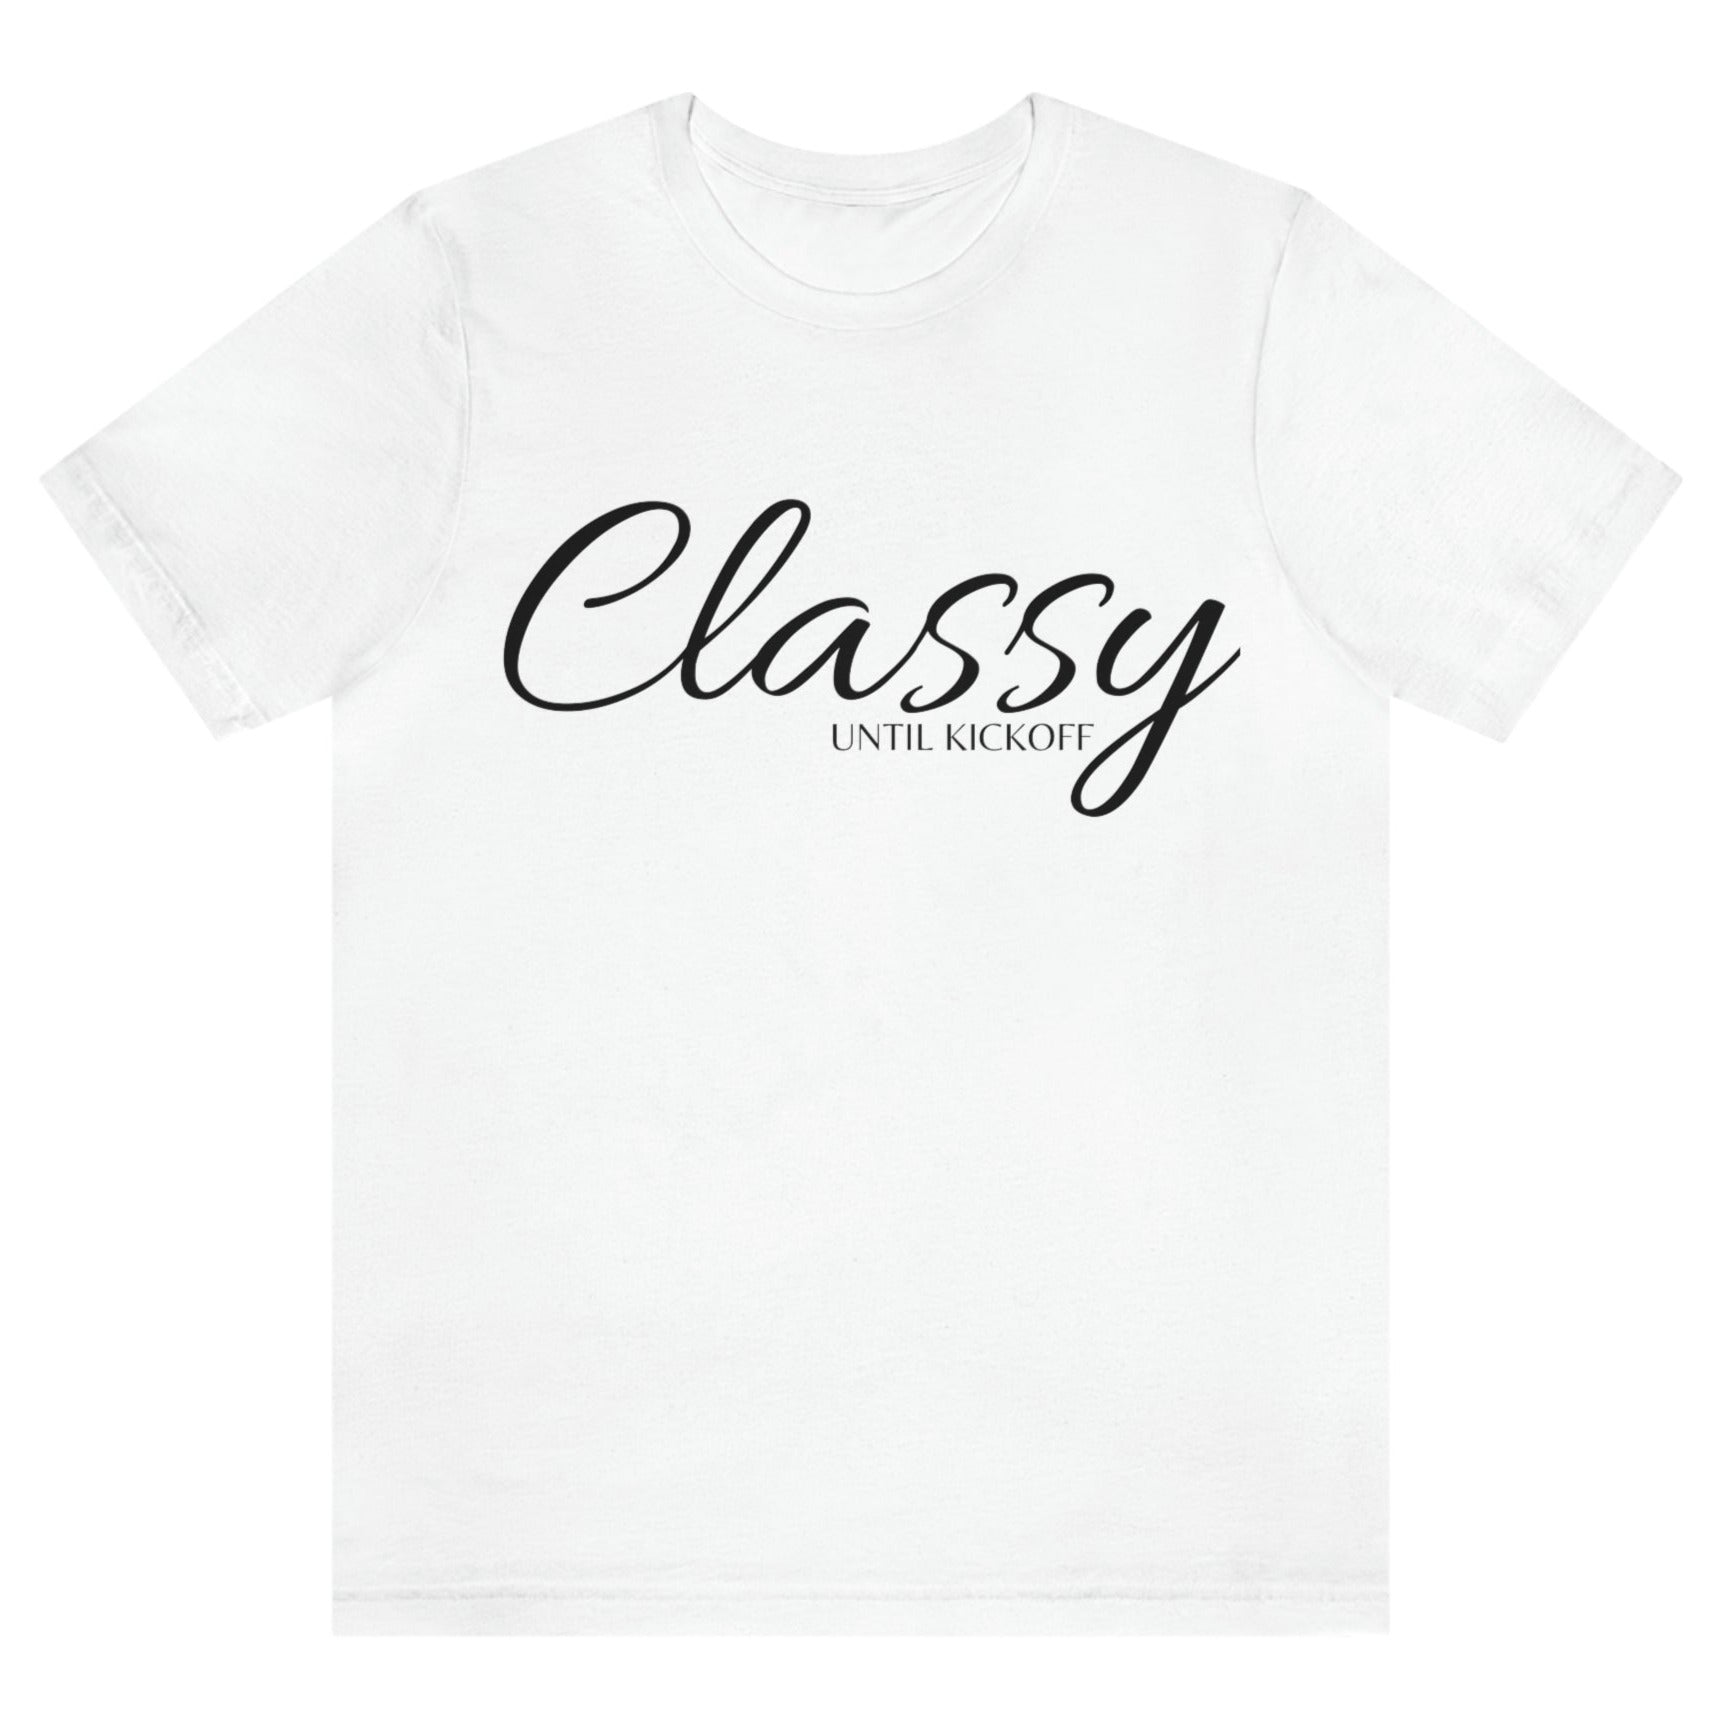 classy-until-kickoff-white-t-shirt-football-soccer-womens